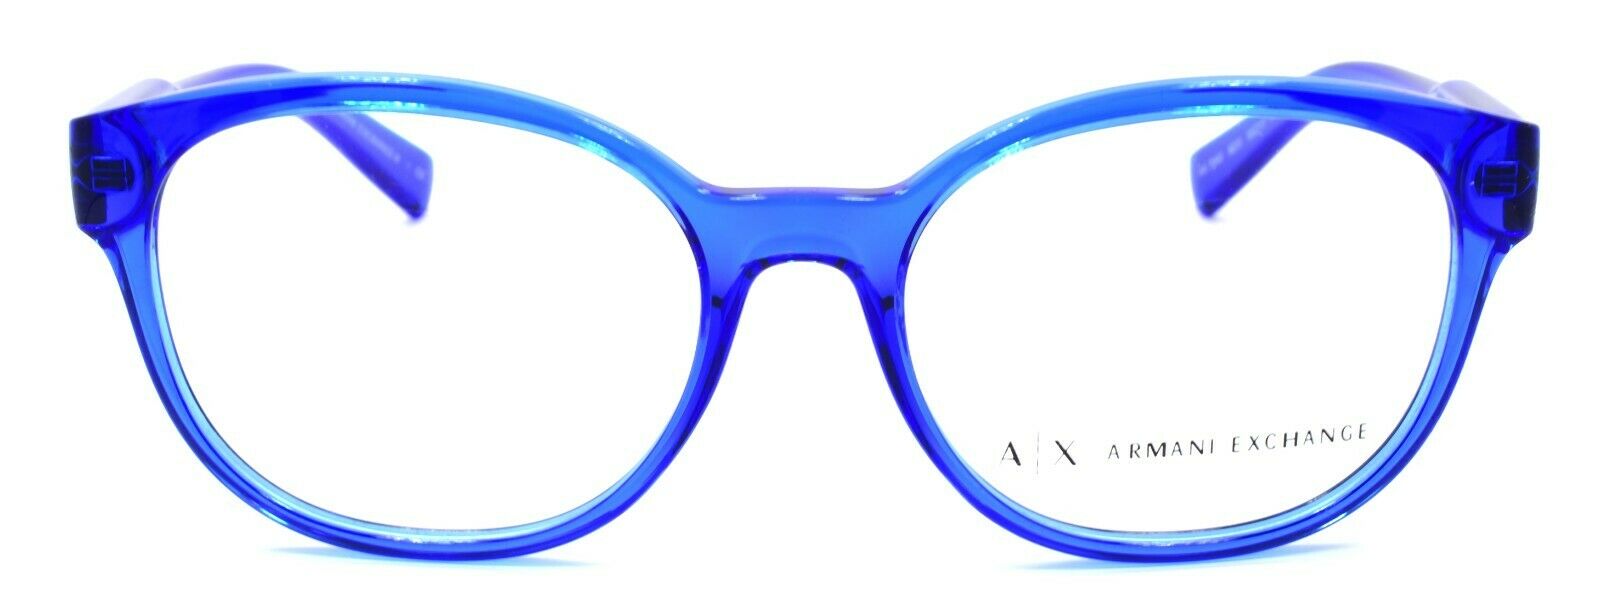 2-Armani Exchange AX3040 8210 Women's Eyeglasses Frames 53-17-140 Transparent Blue-8053672627220-IKSpecs